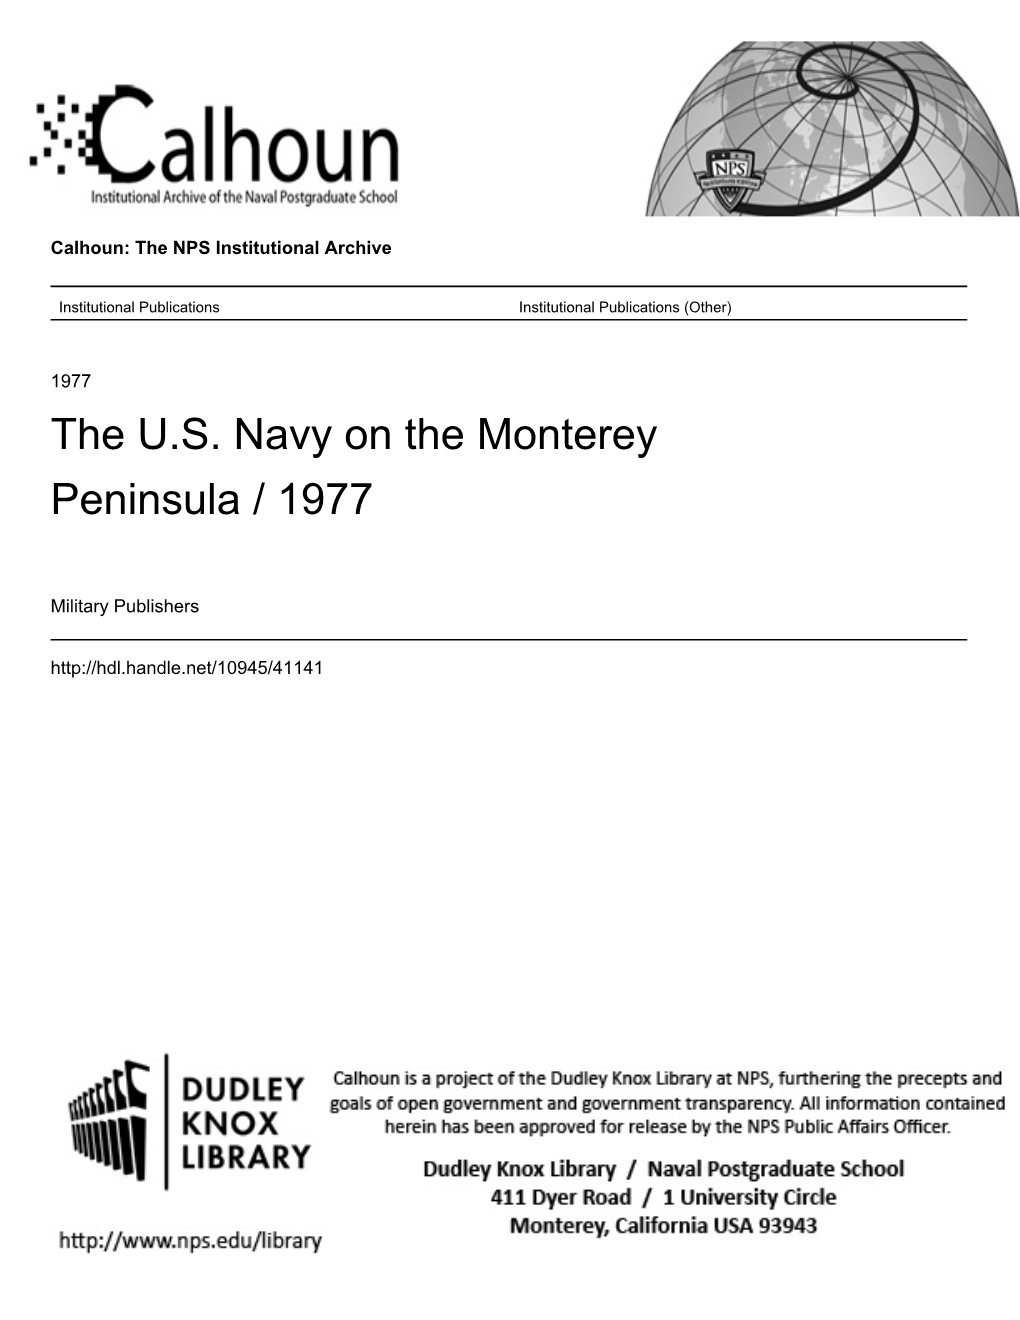 The U.S. Navy on the Monterey Peninsula / 1977